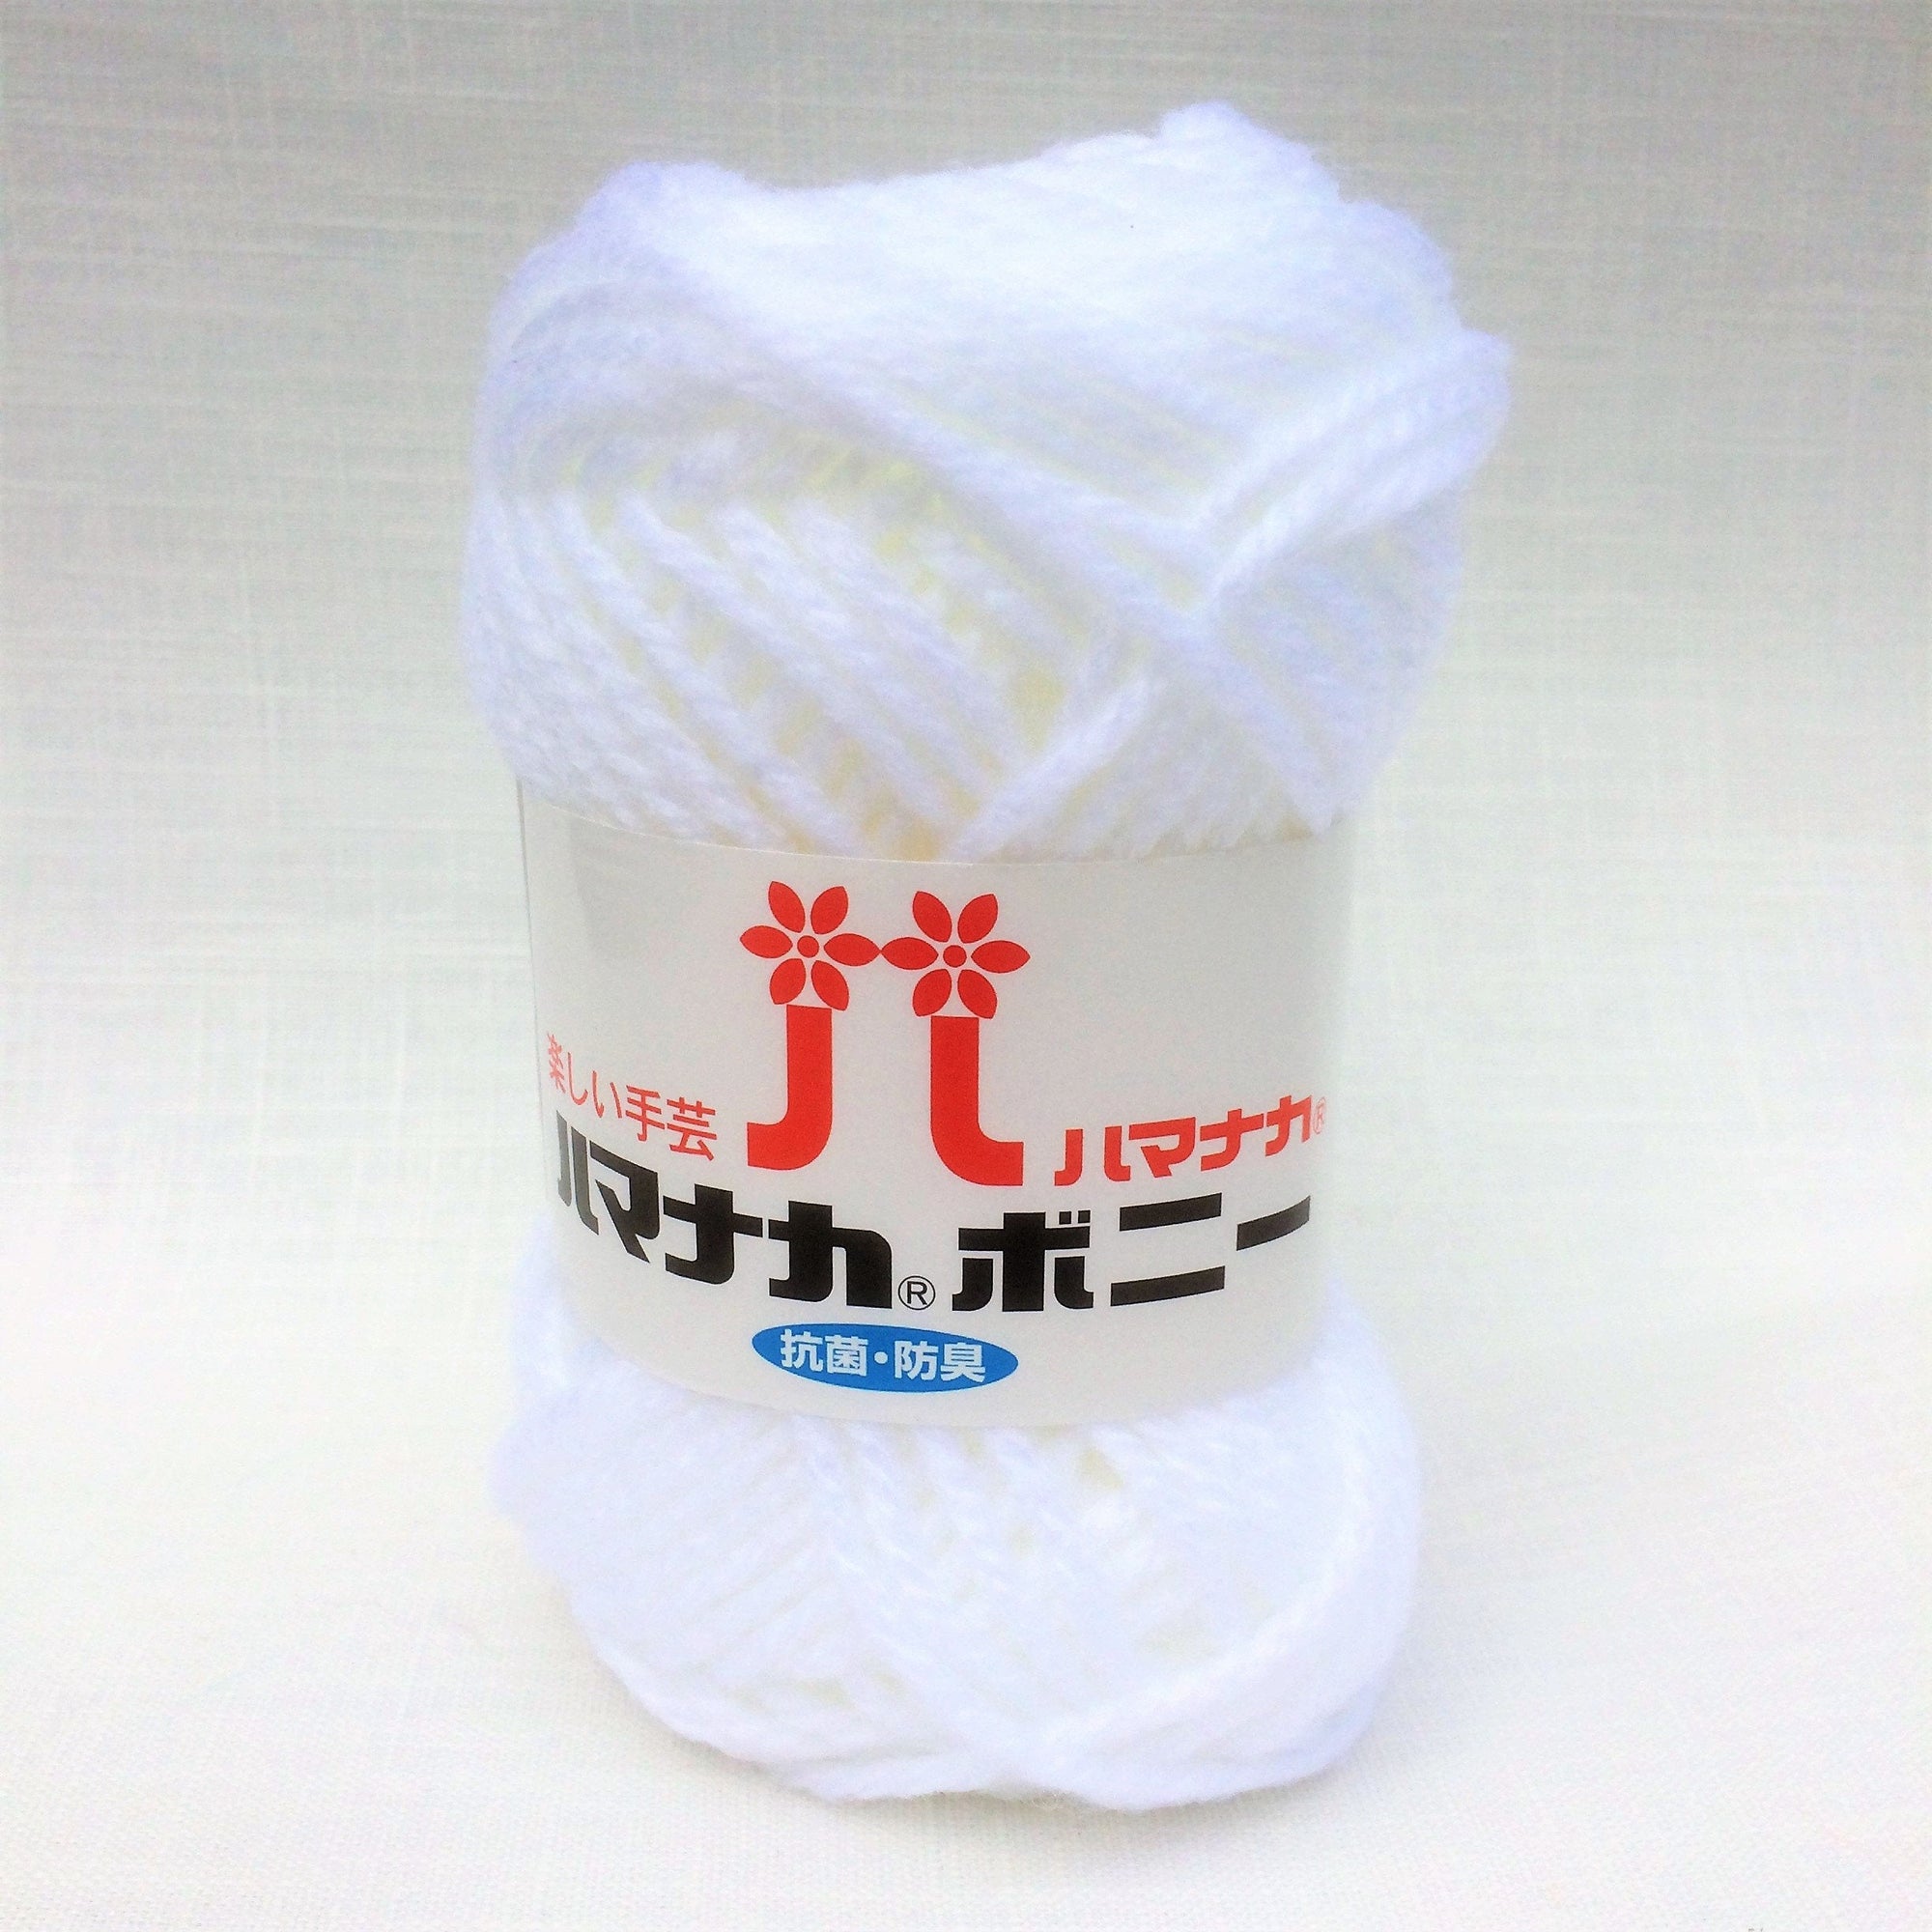 Hamanaka Bonny Yarn- White